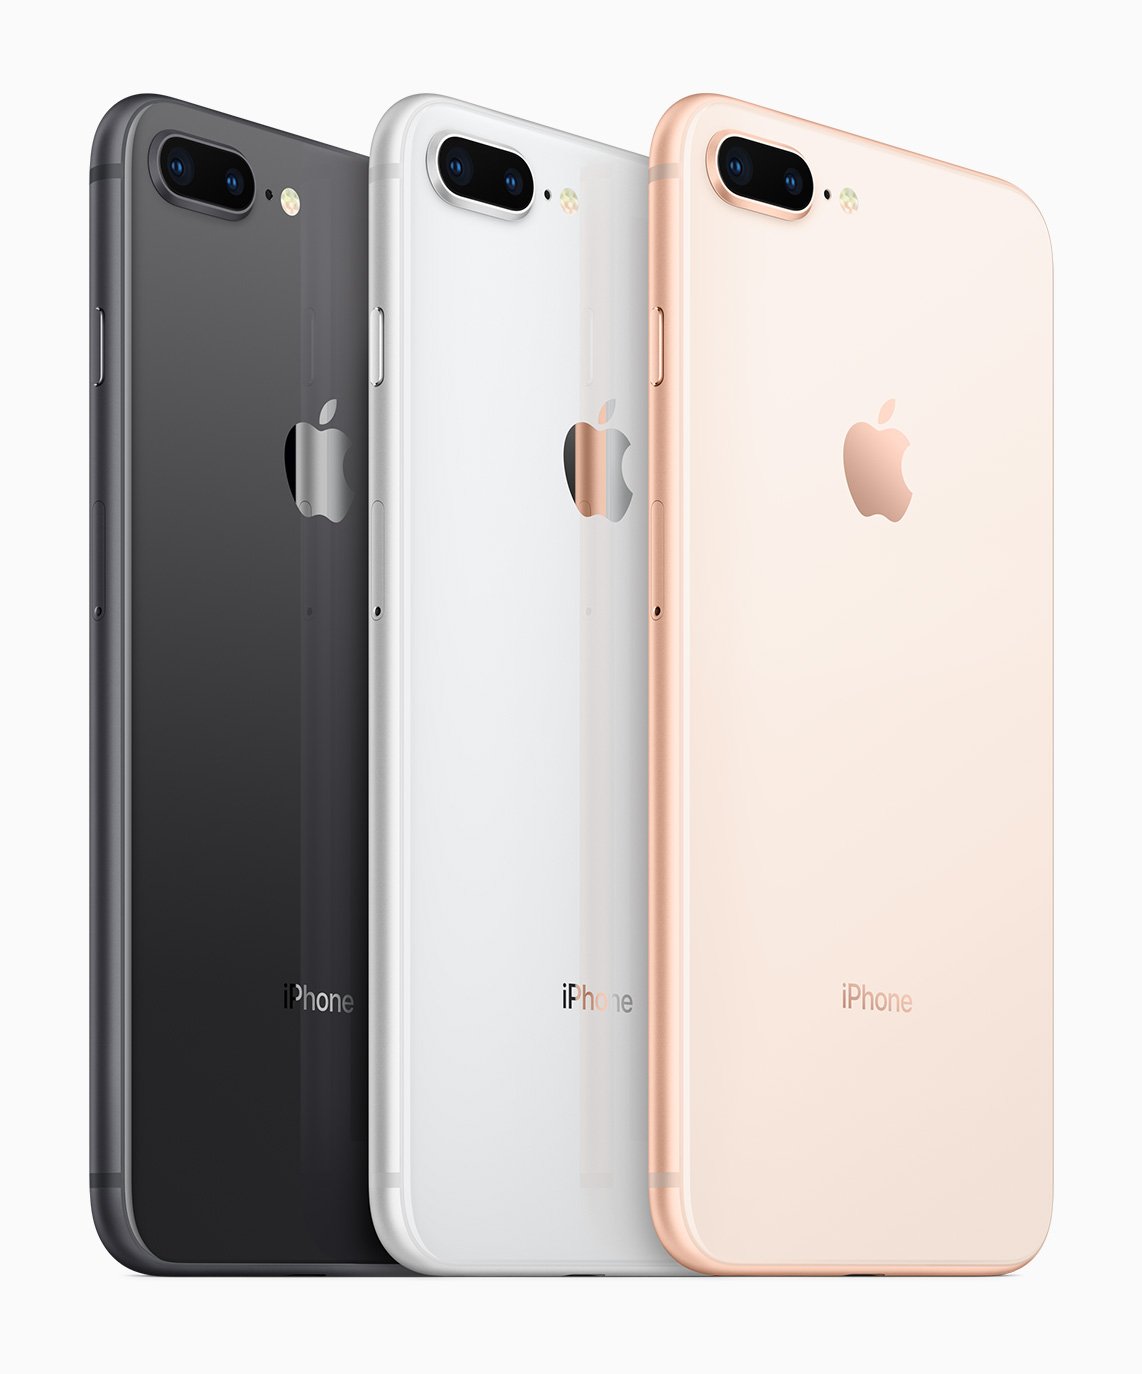 iPhone8Plus color selection